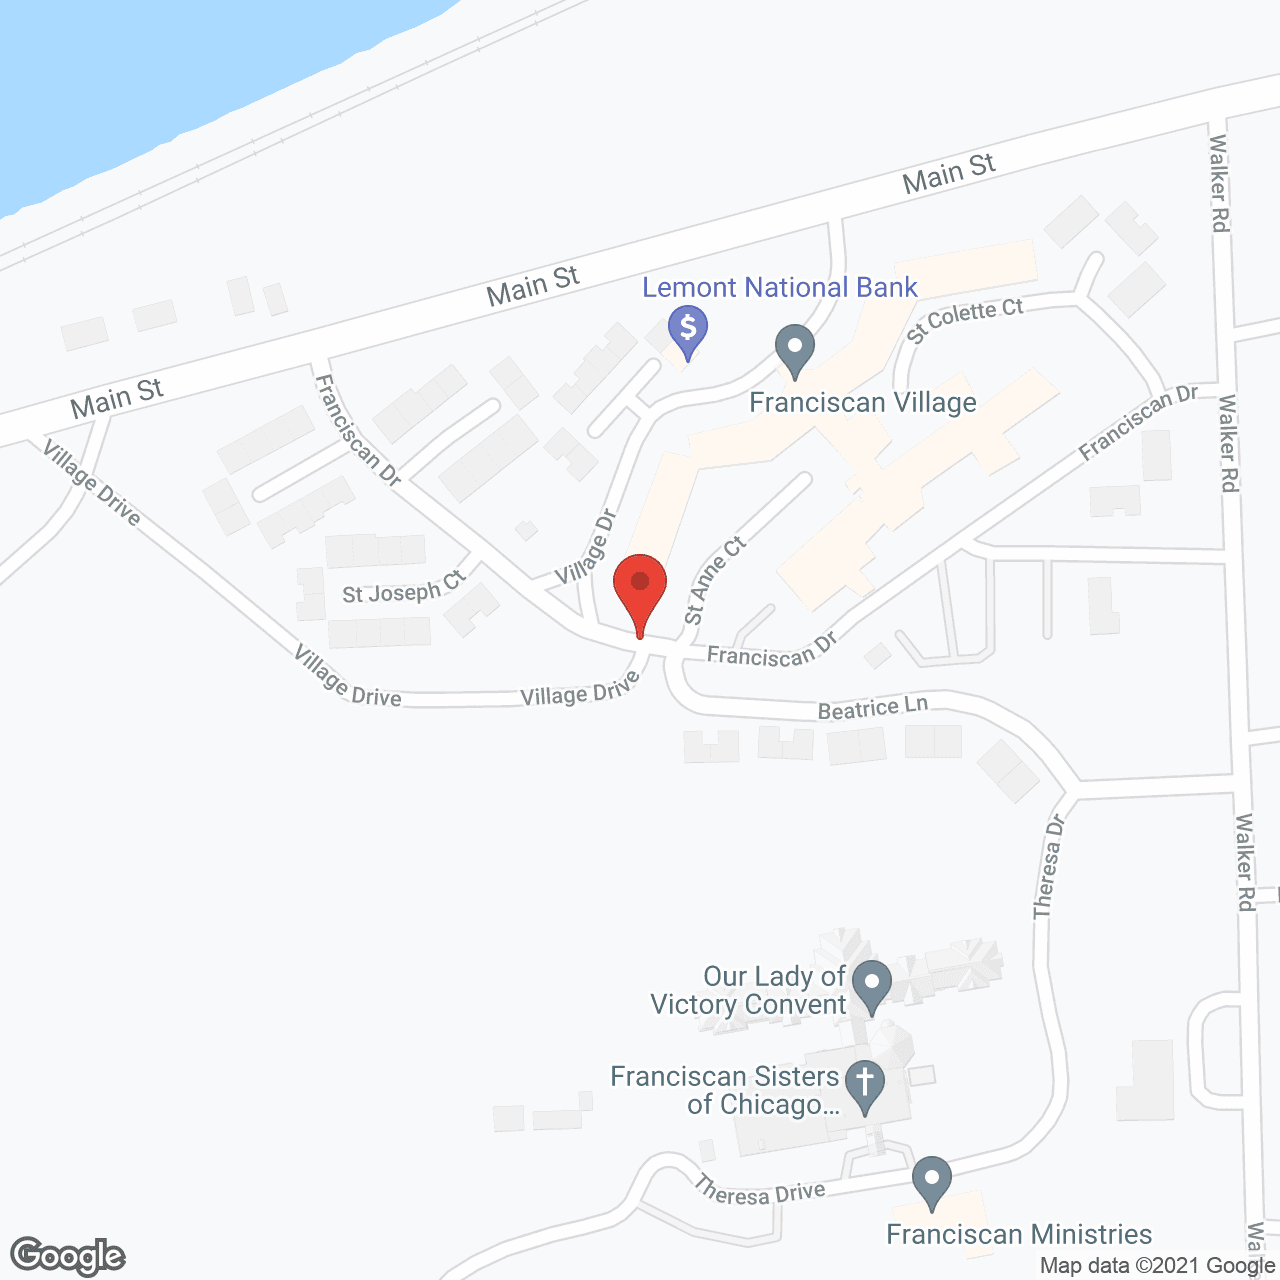 Franciscan Village in google map